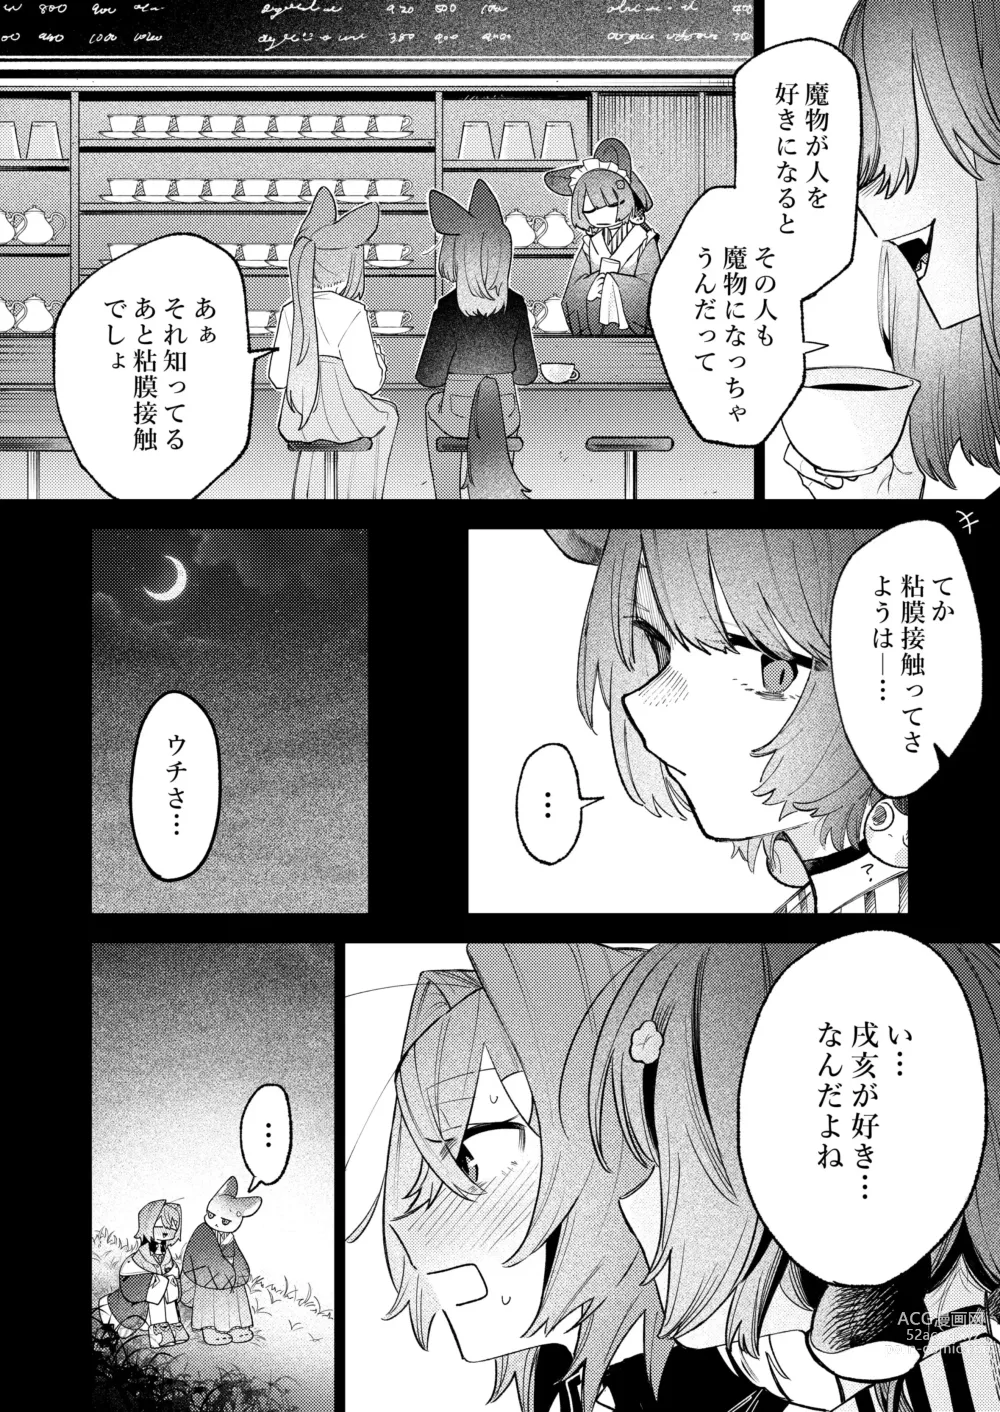 Page 2 of doujinshi Imi Denshin